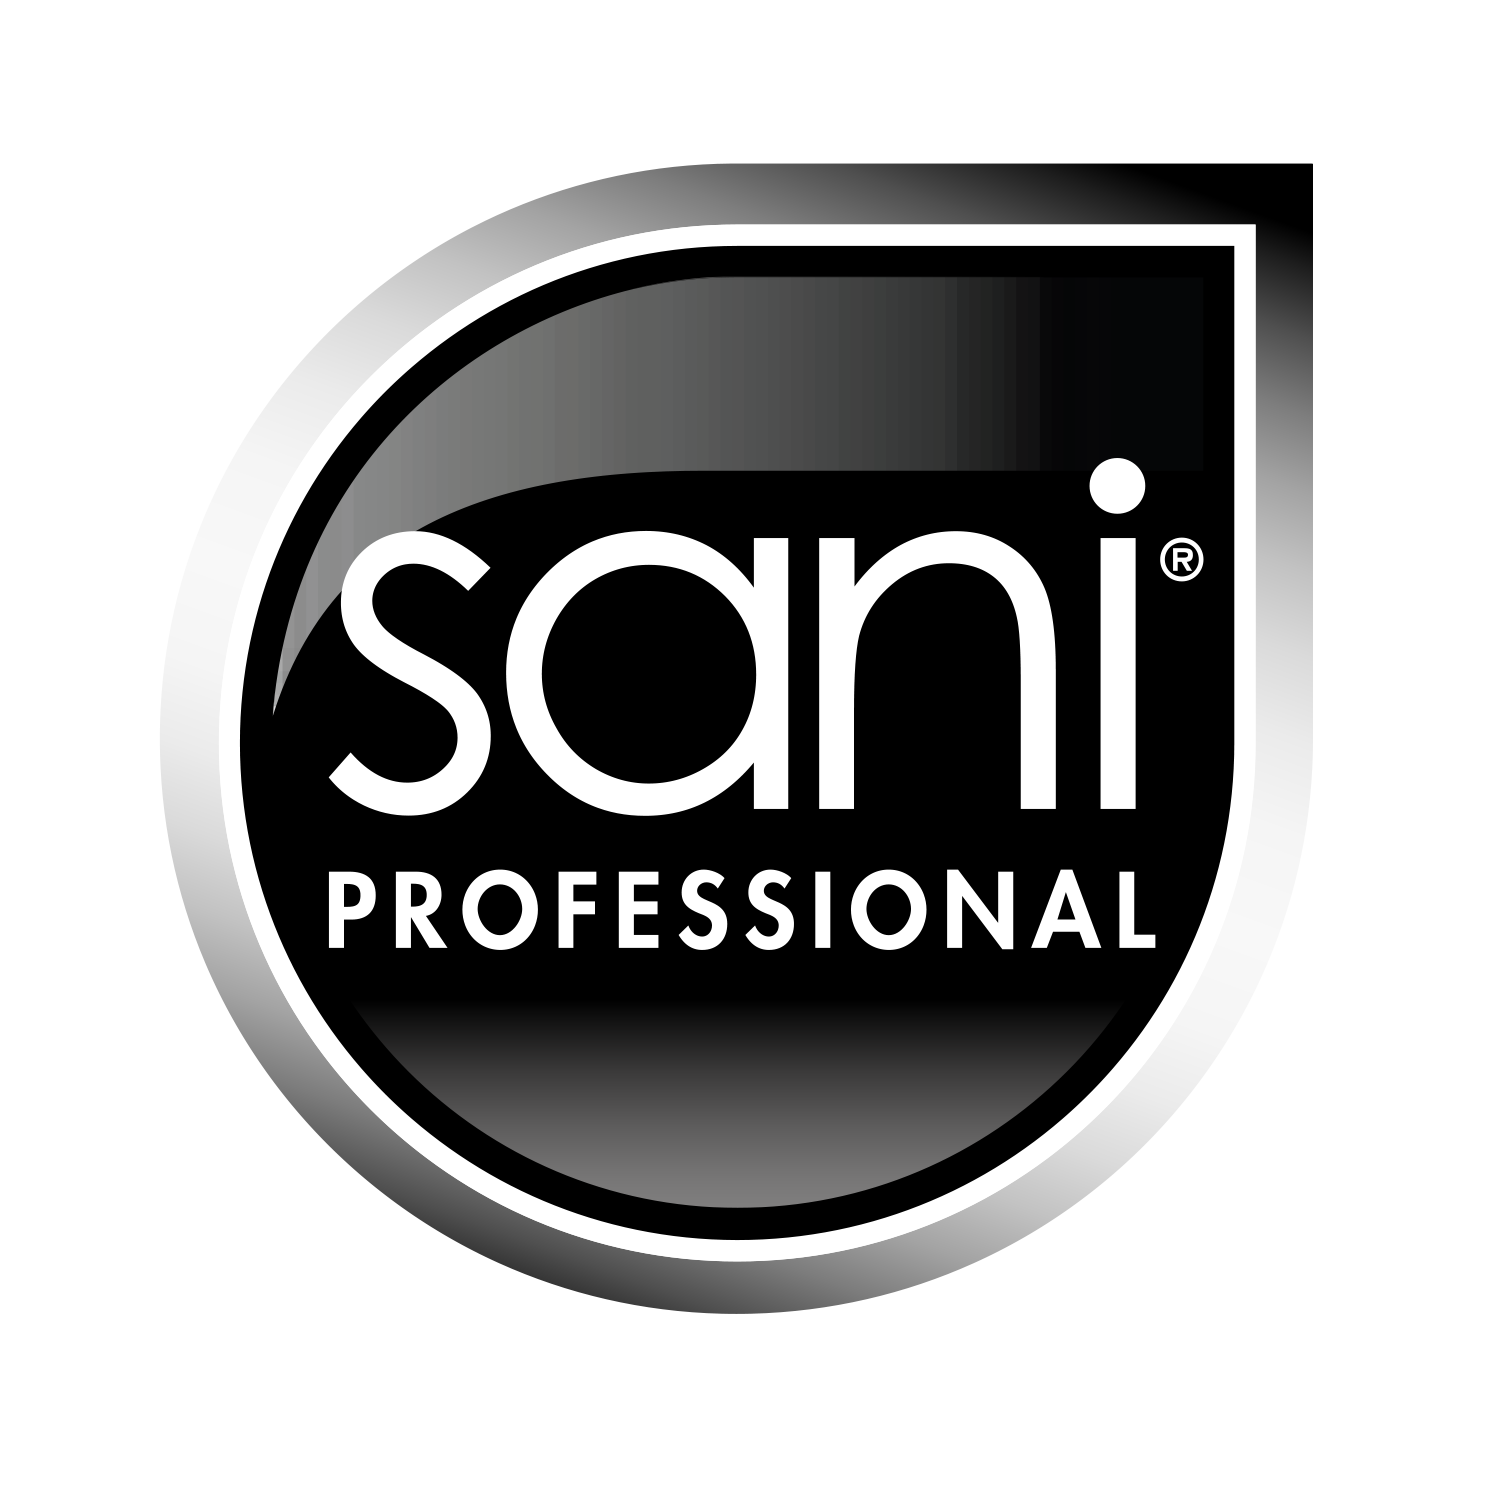 Sani Professional